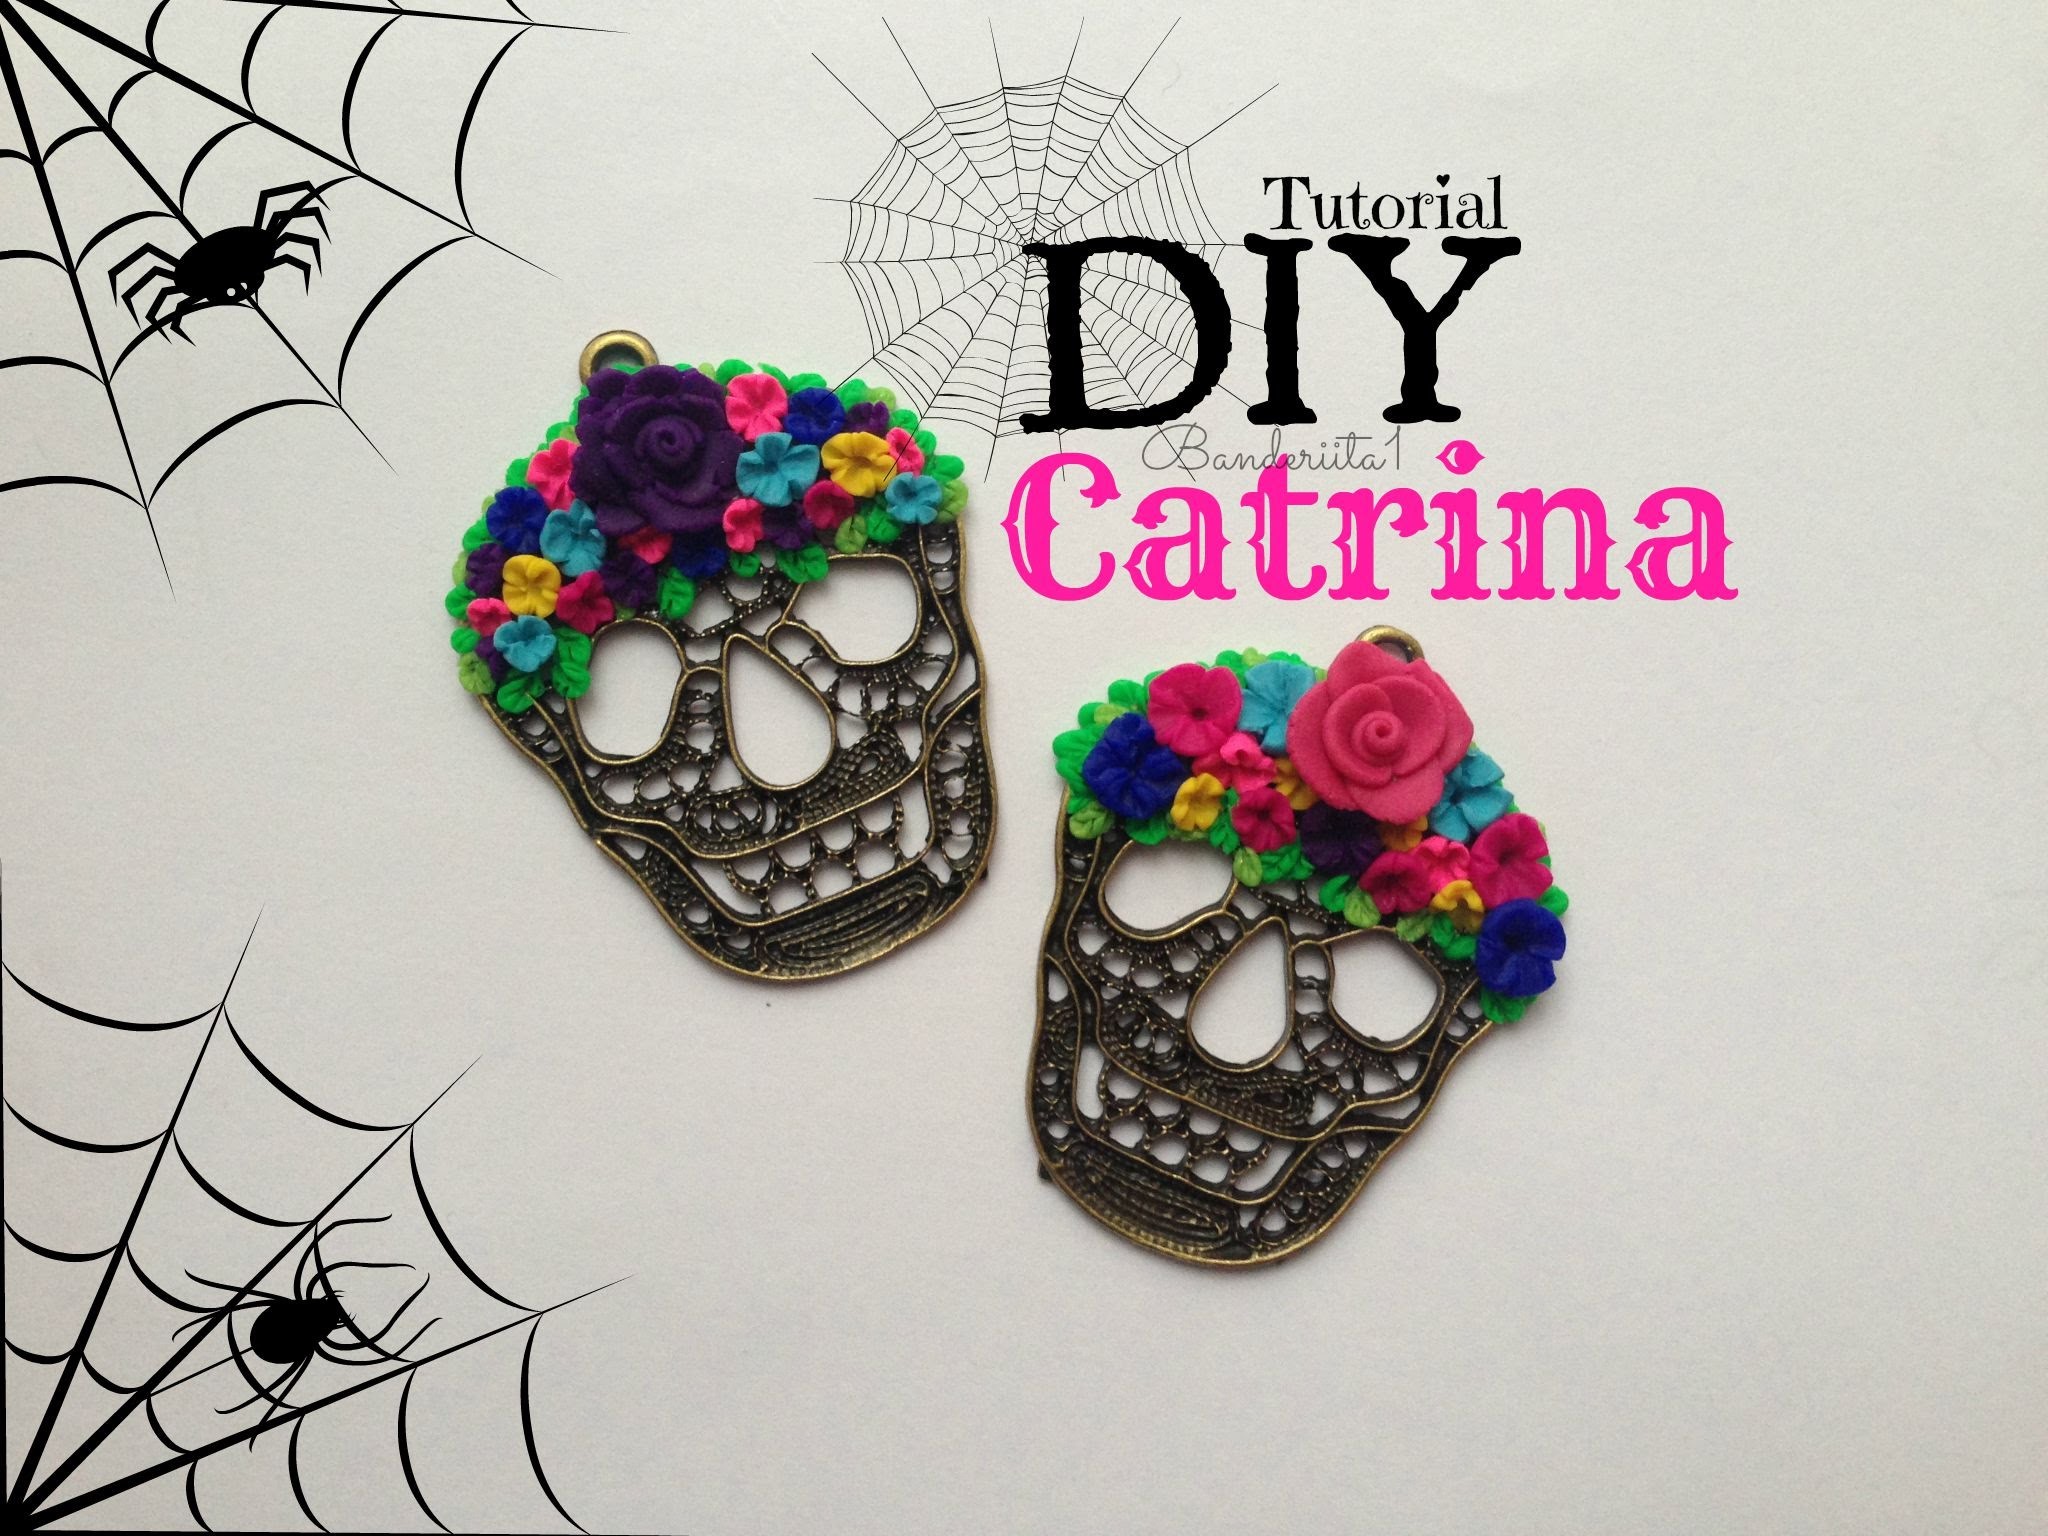 Catrina Tutorial DIY- How to Sugar Skull Polymer Clay